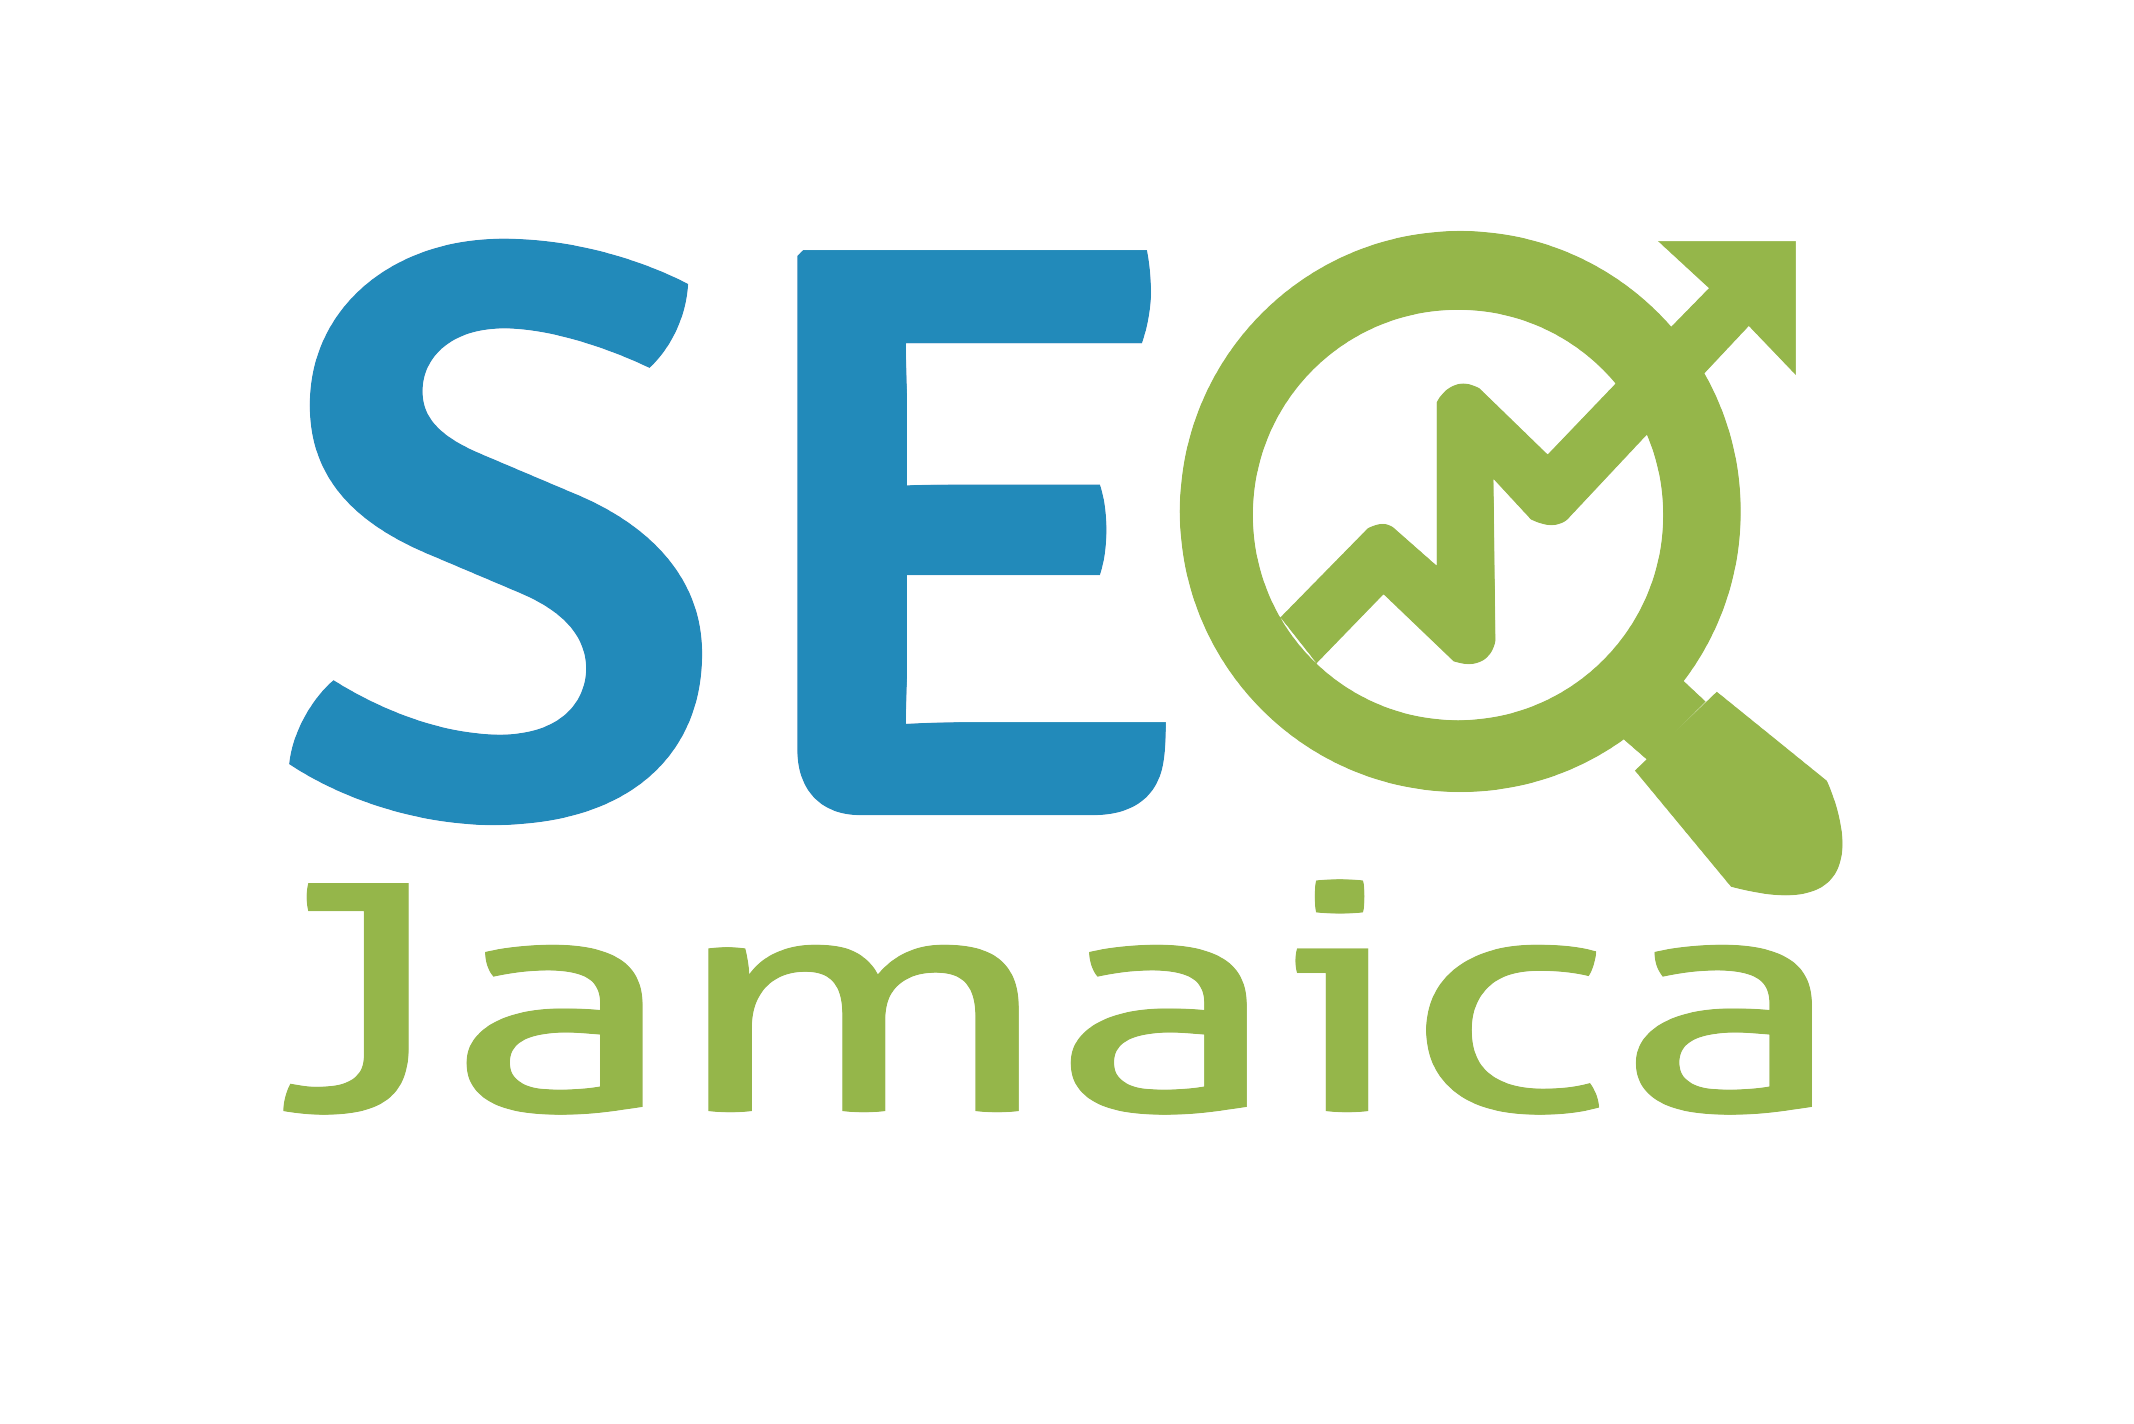 Seo Jamaica